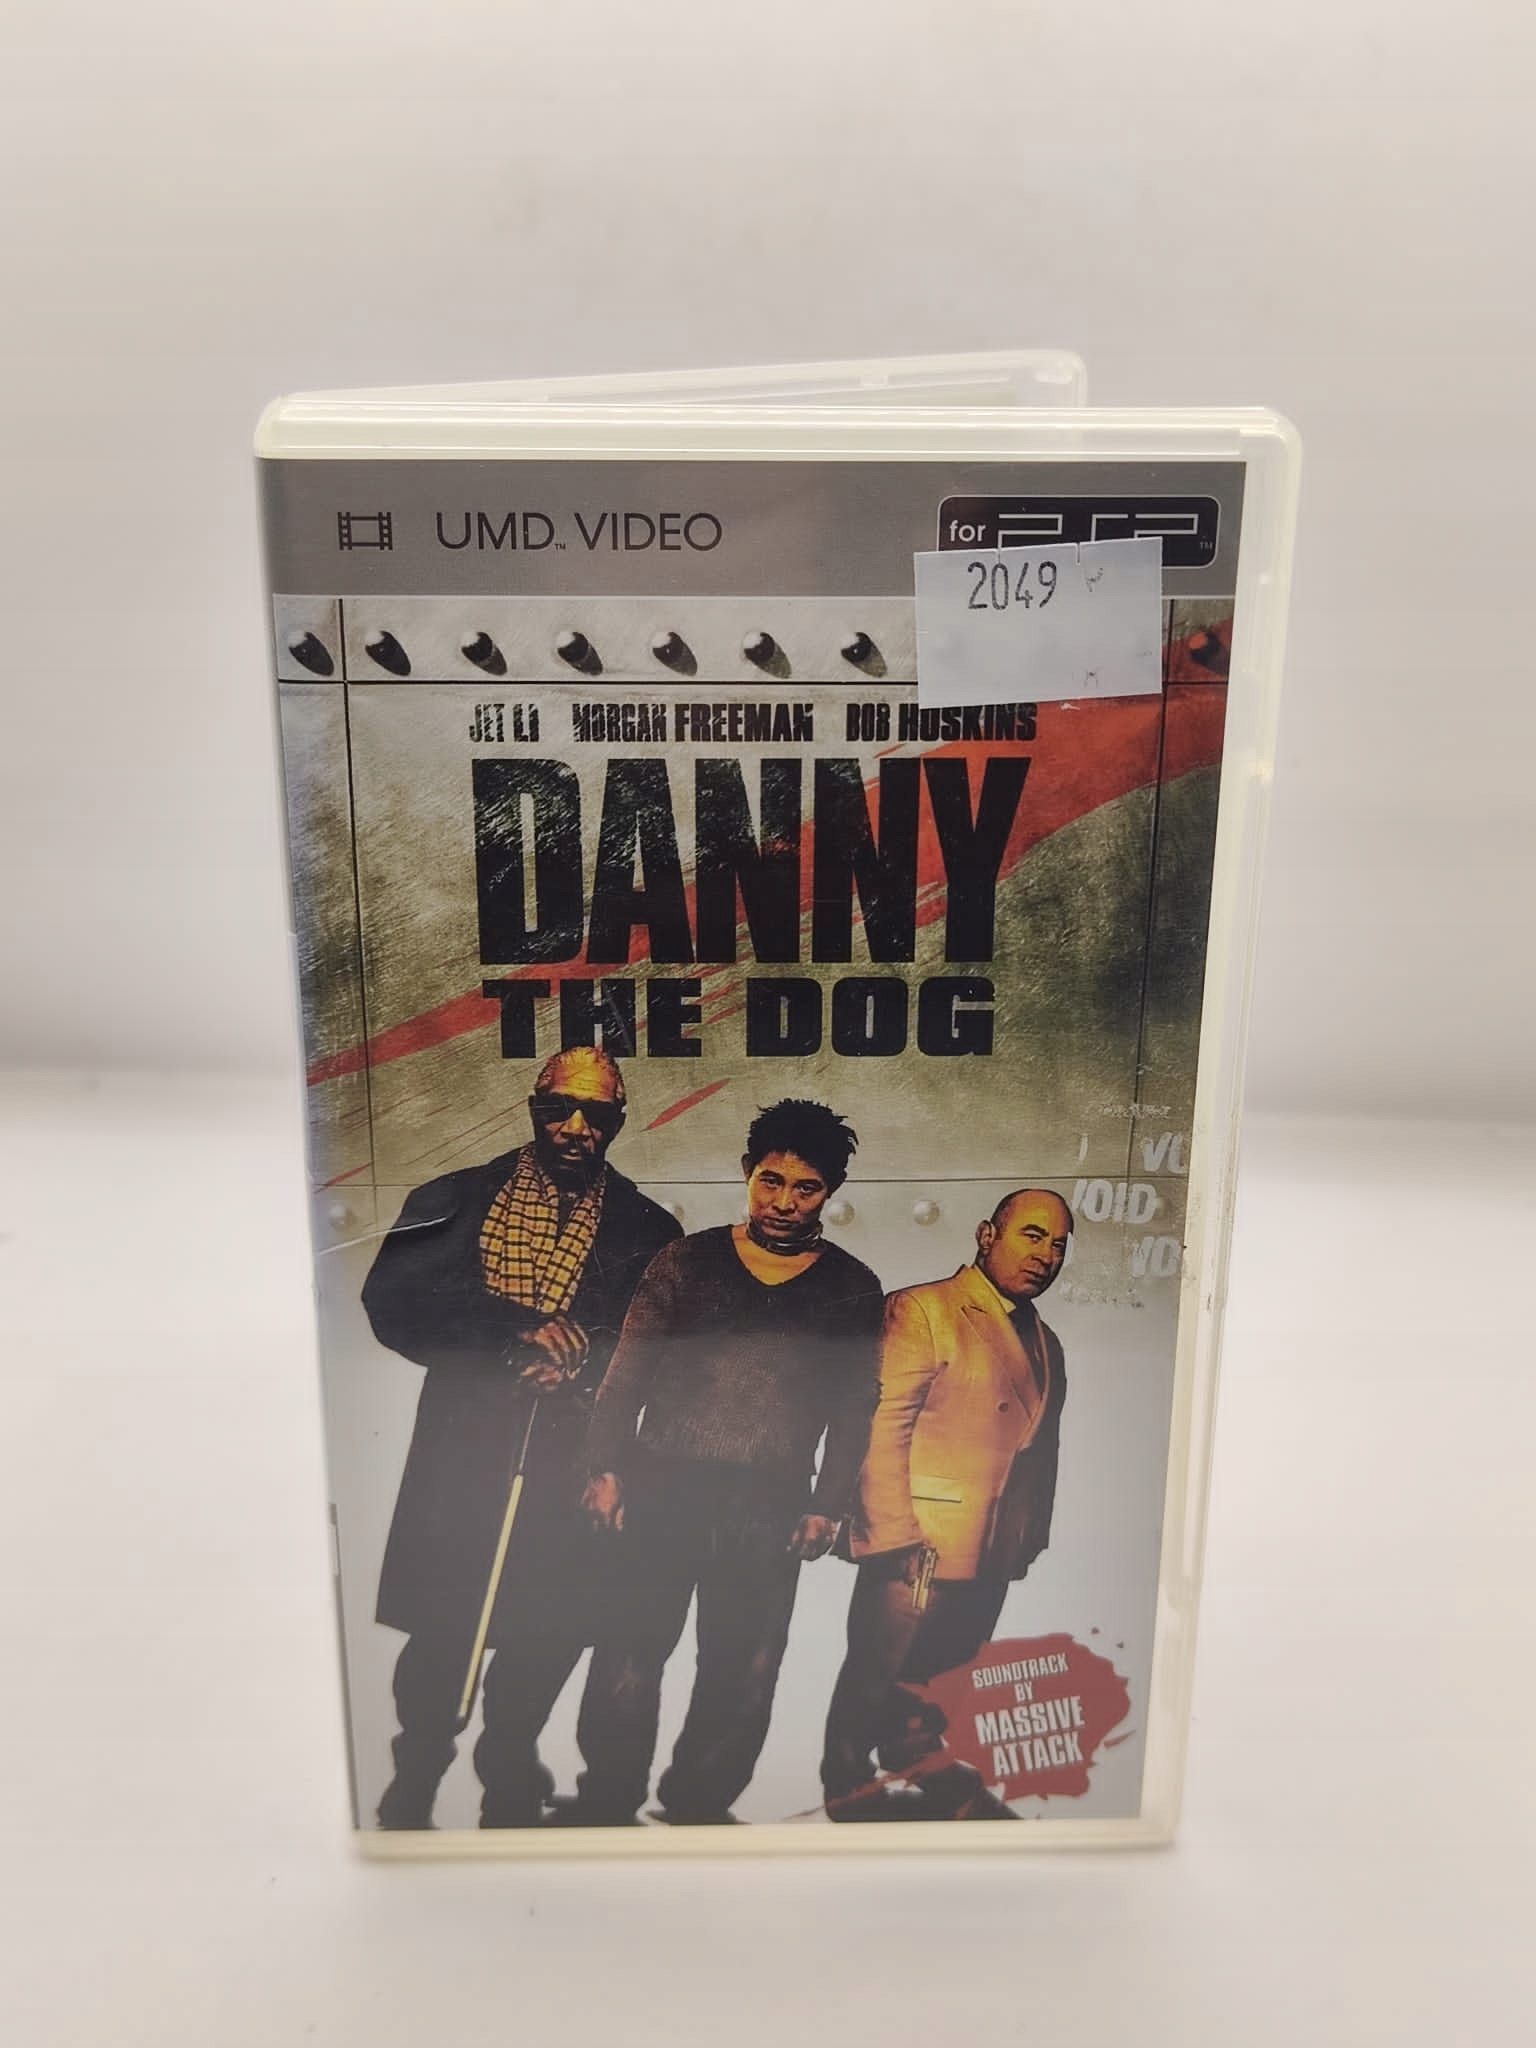 DANNY THE DOG PSP UMD VIDEO Sony PSP